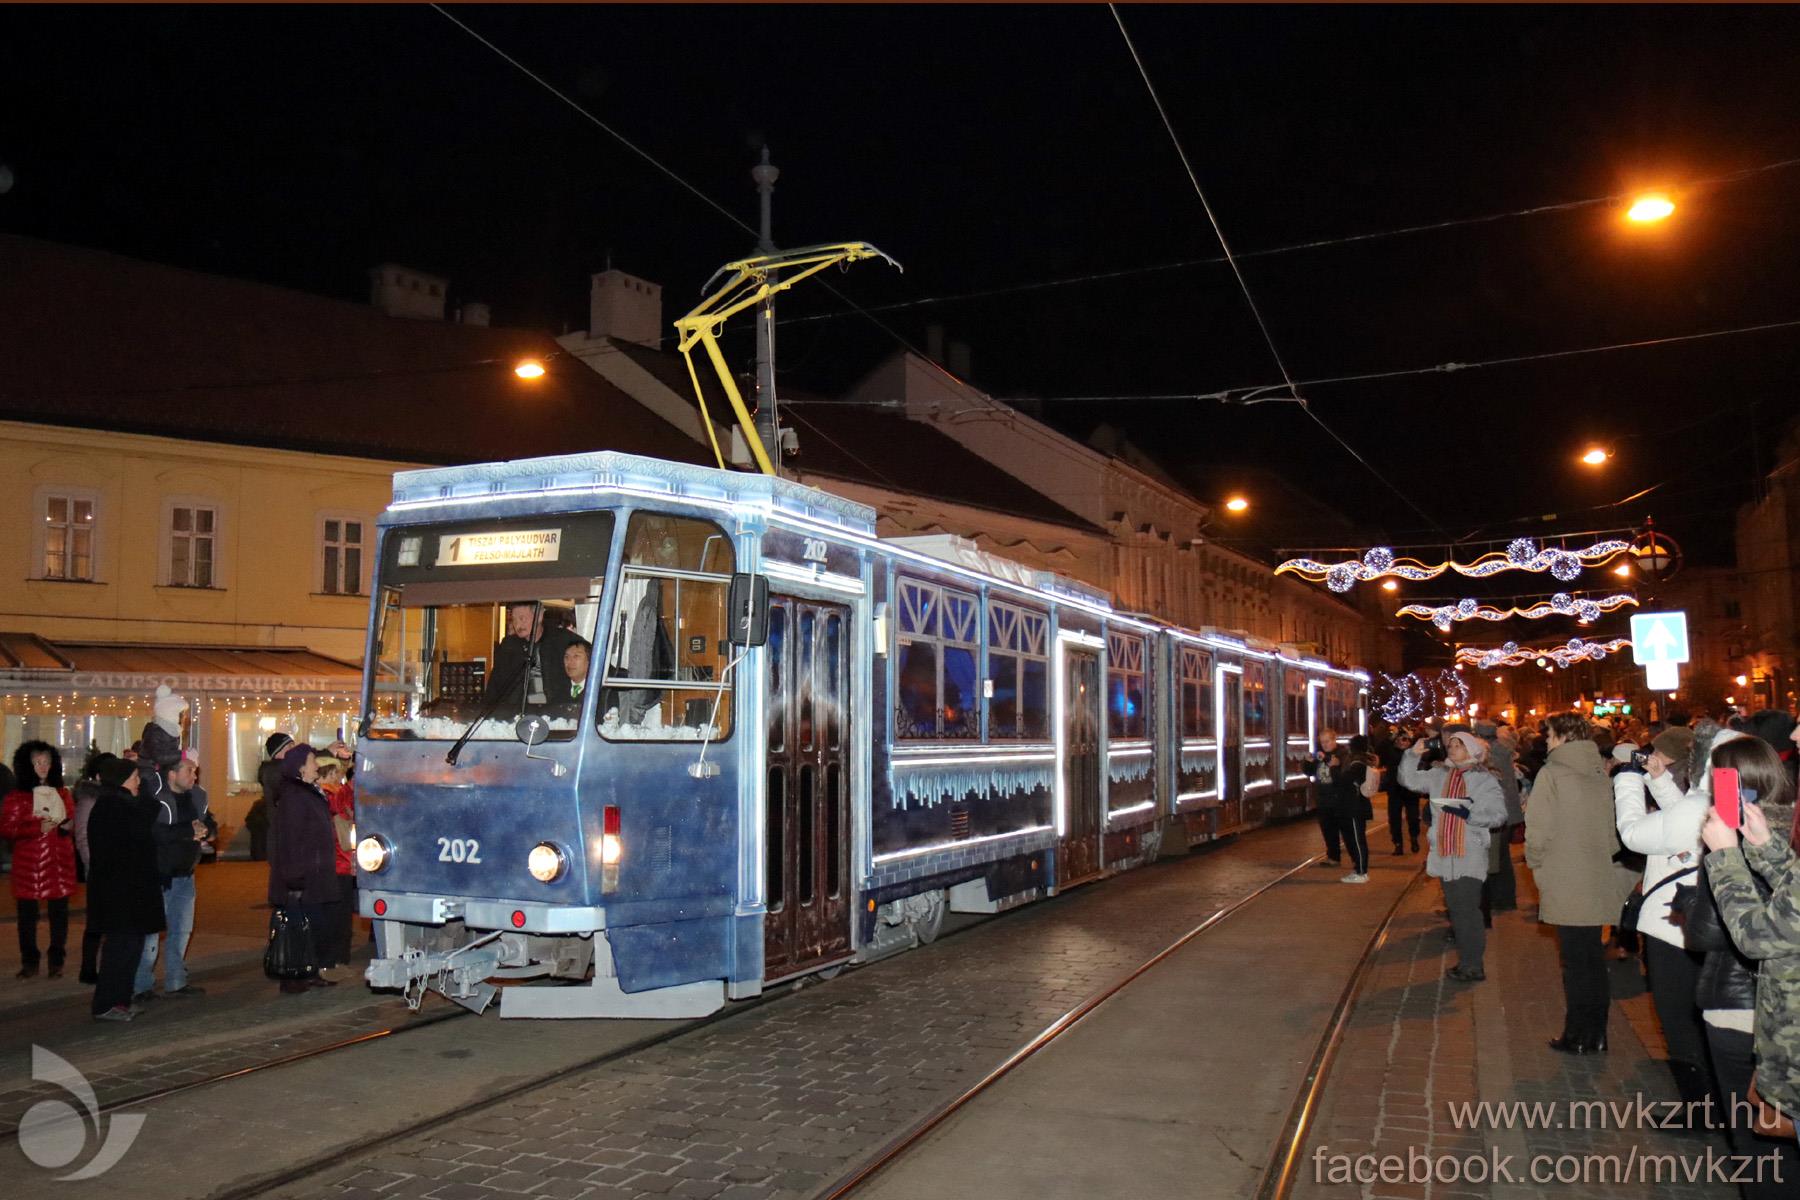 tranvía, Miskolc, advenimiento, transporte